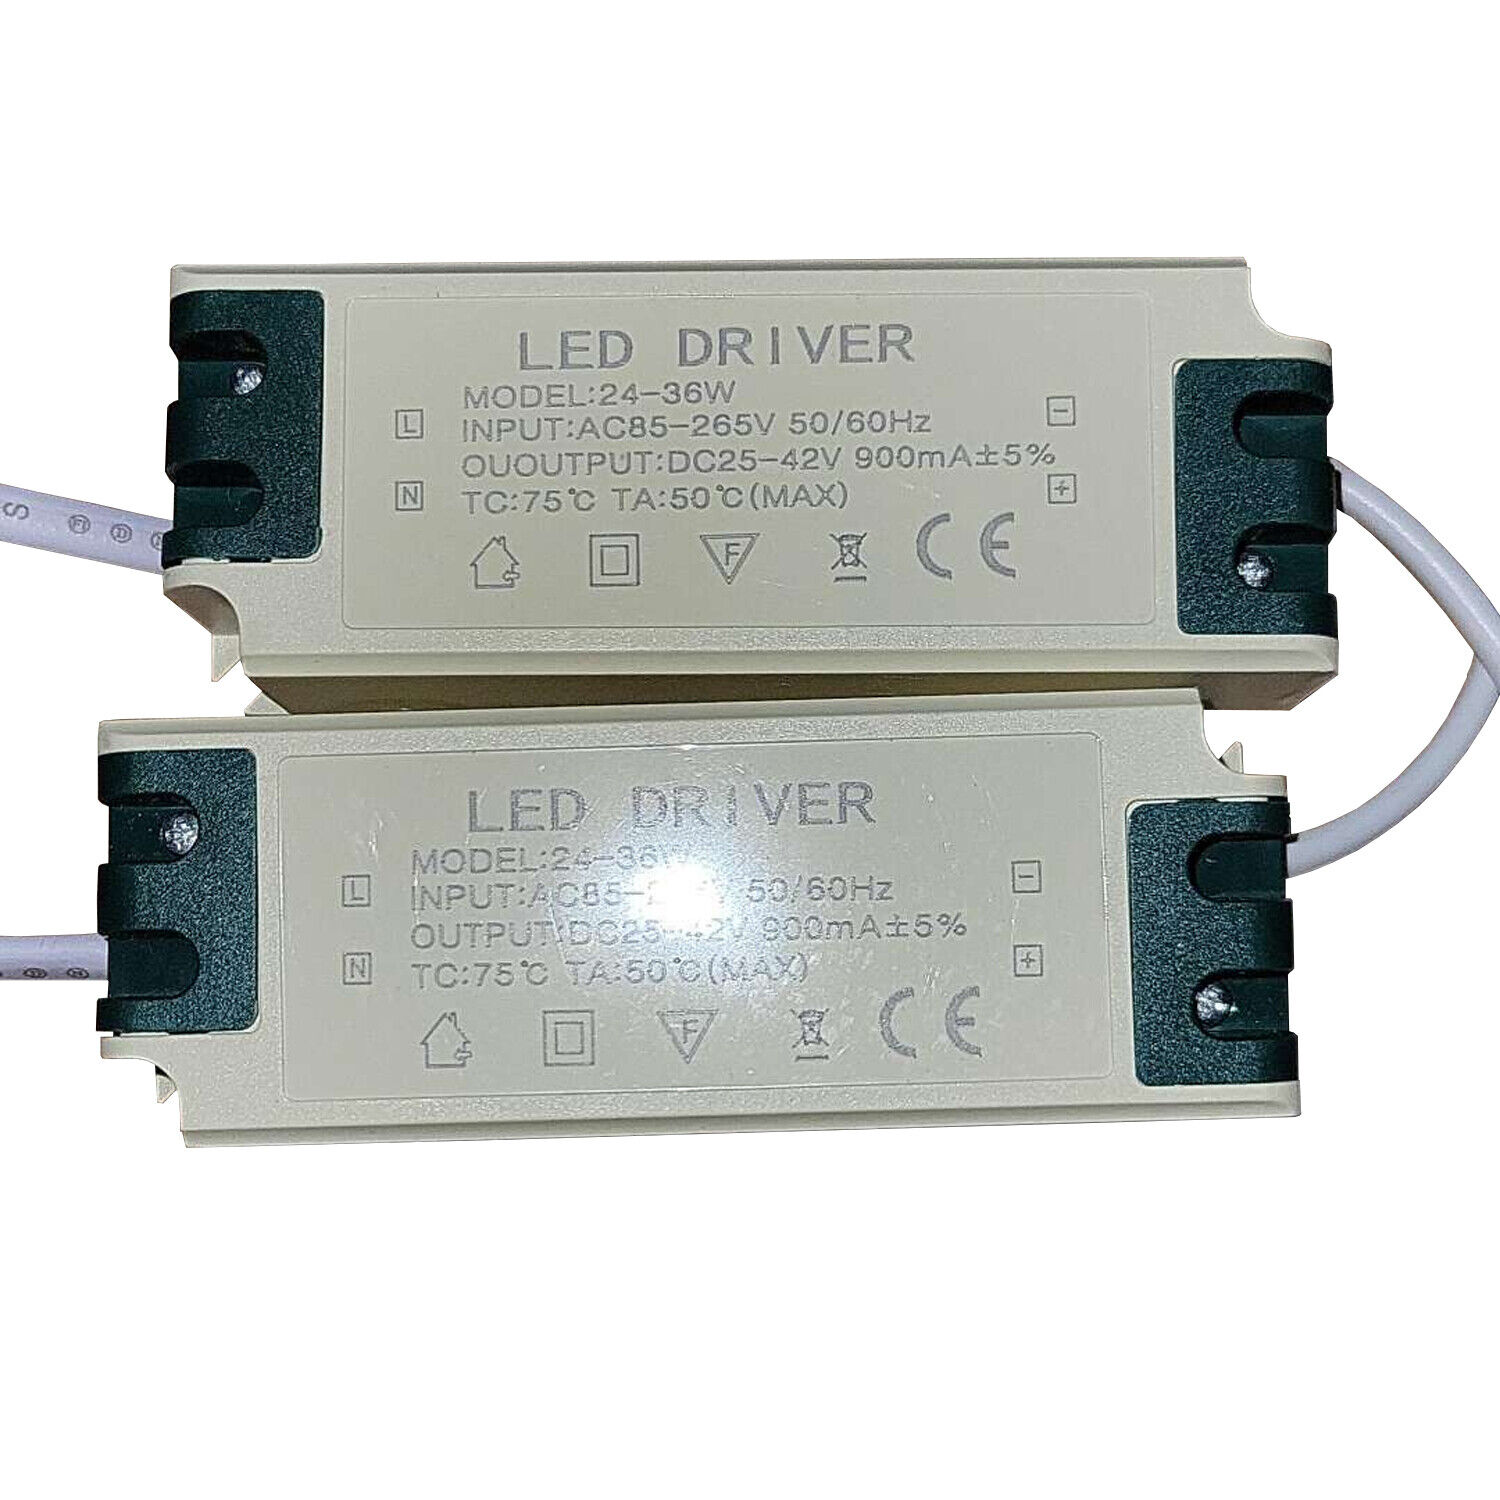 AC- DC24 - 36V LED Driver Power Supply Transformer Adapter LED